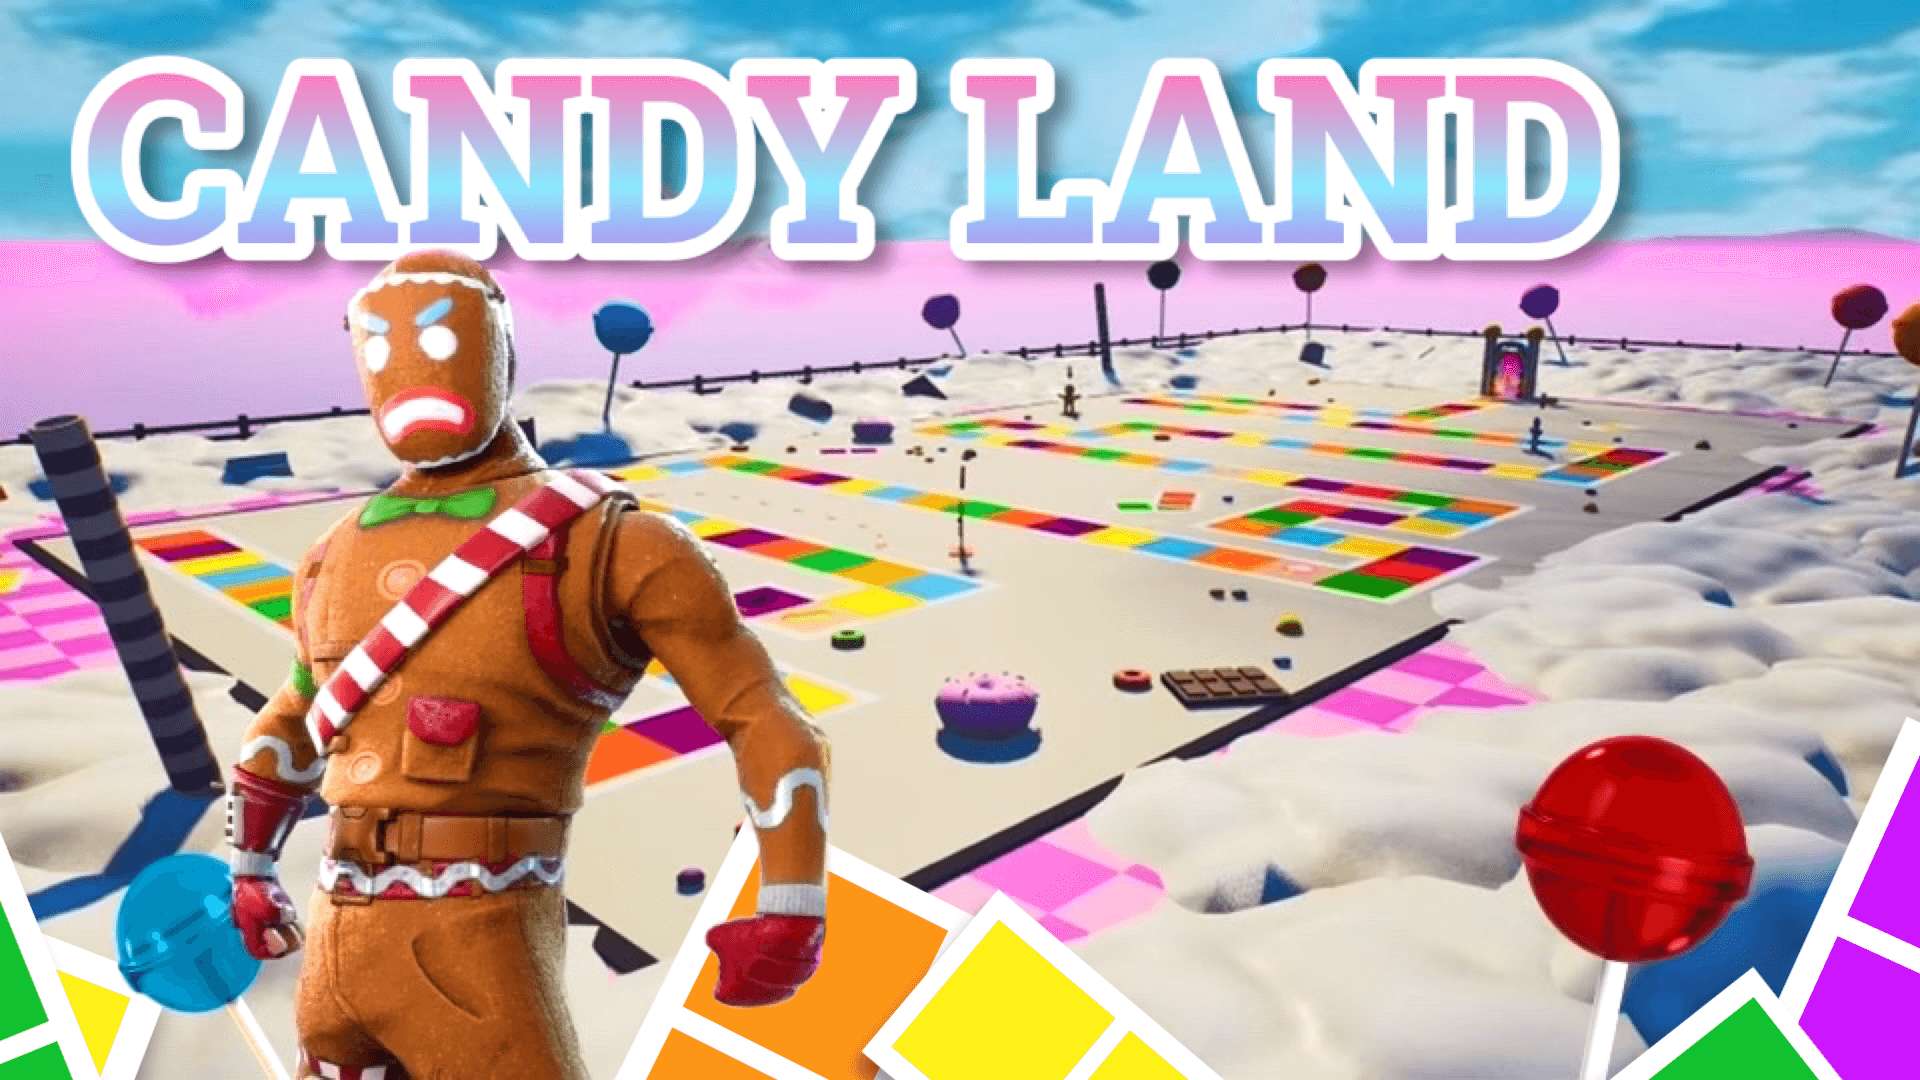 CANDY LANE BOARD GAME